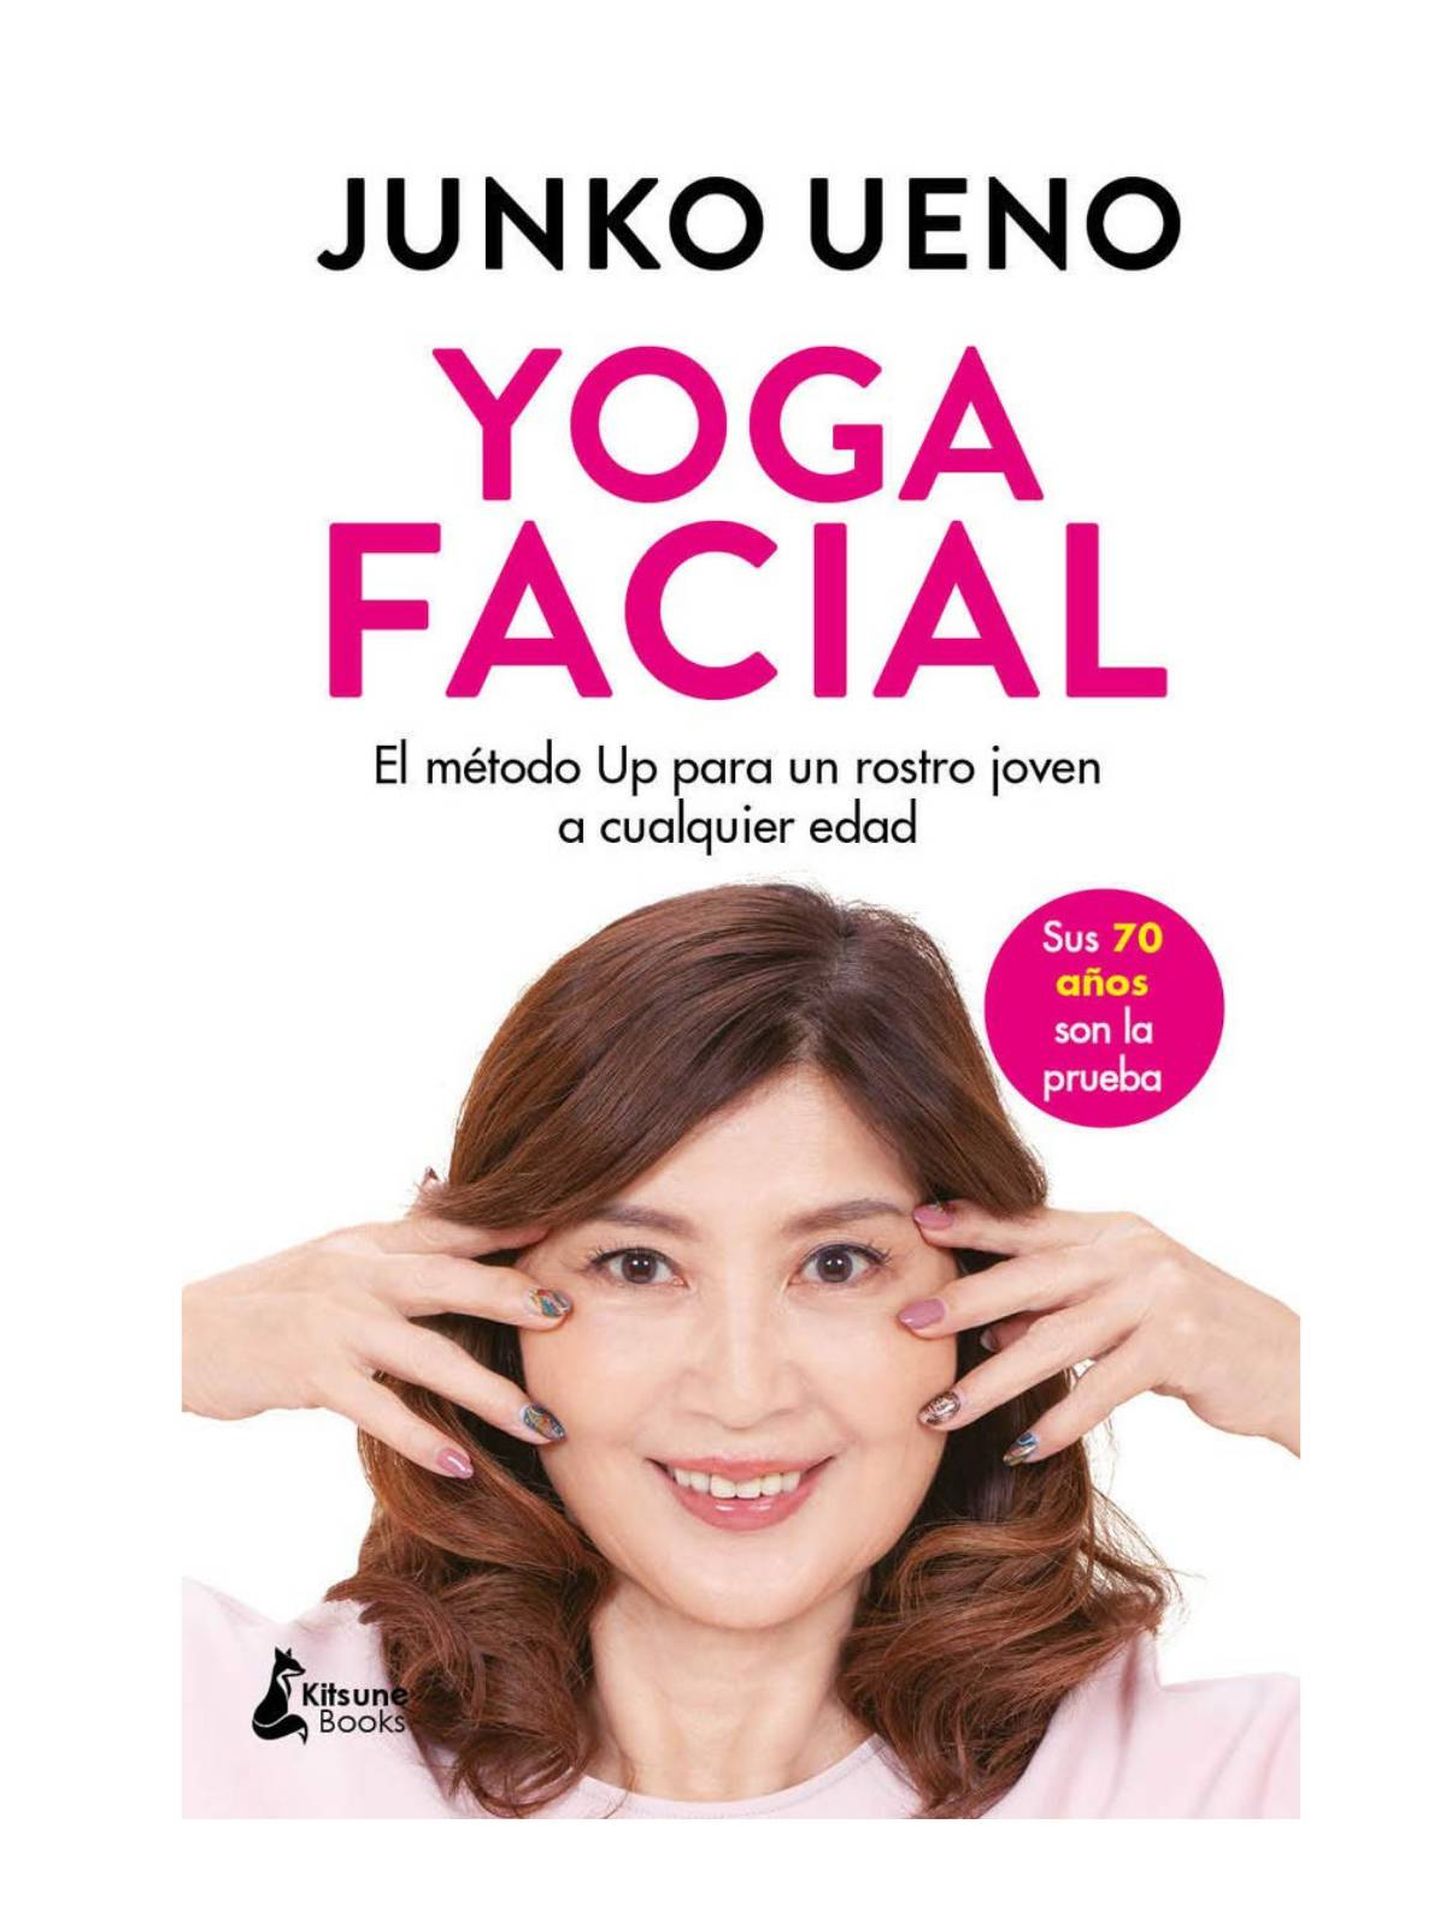 El método Up de Junko Ueno, 'Yoga Facial', de Kitsune Books.